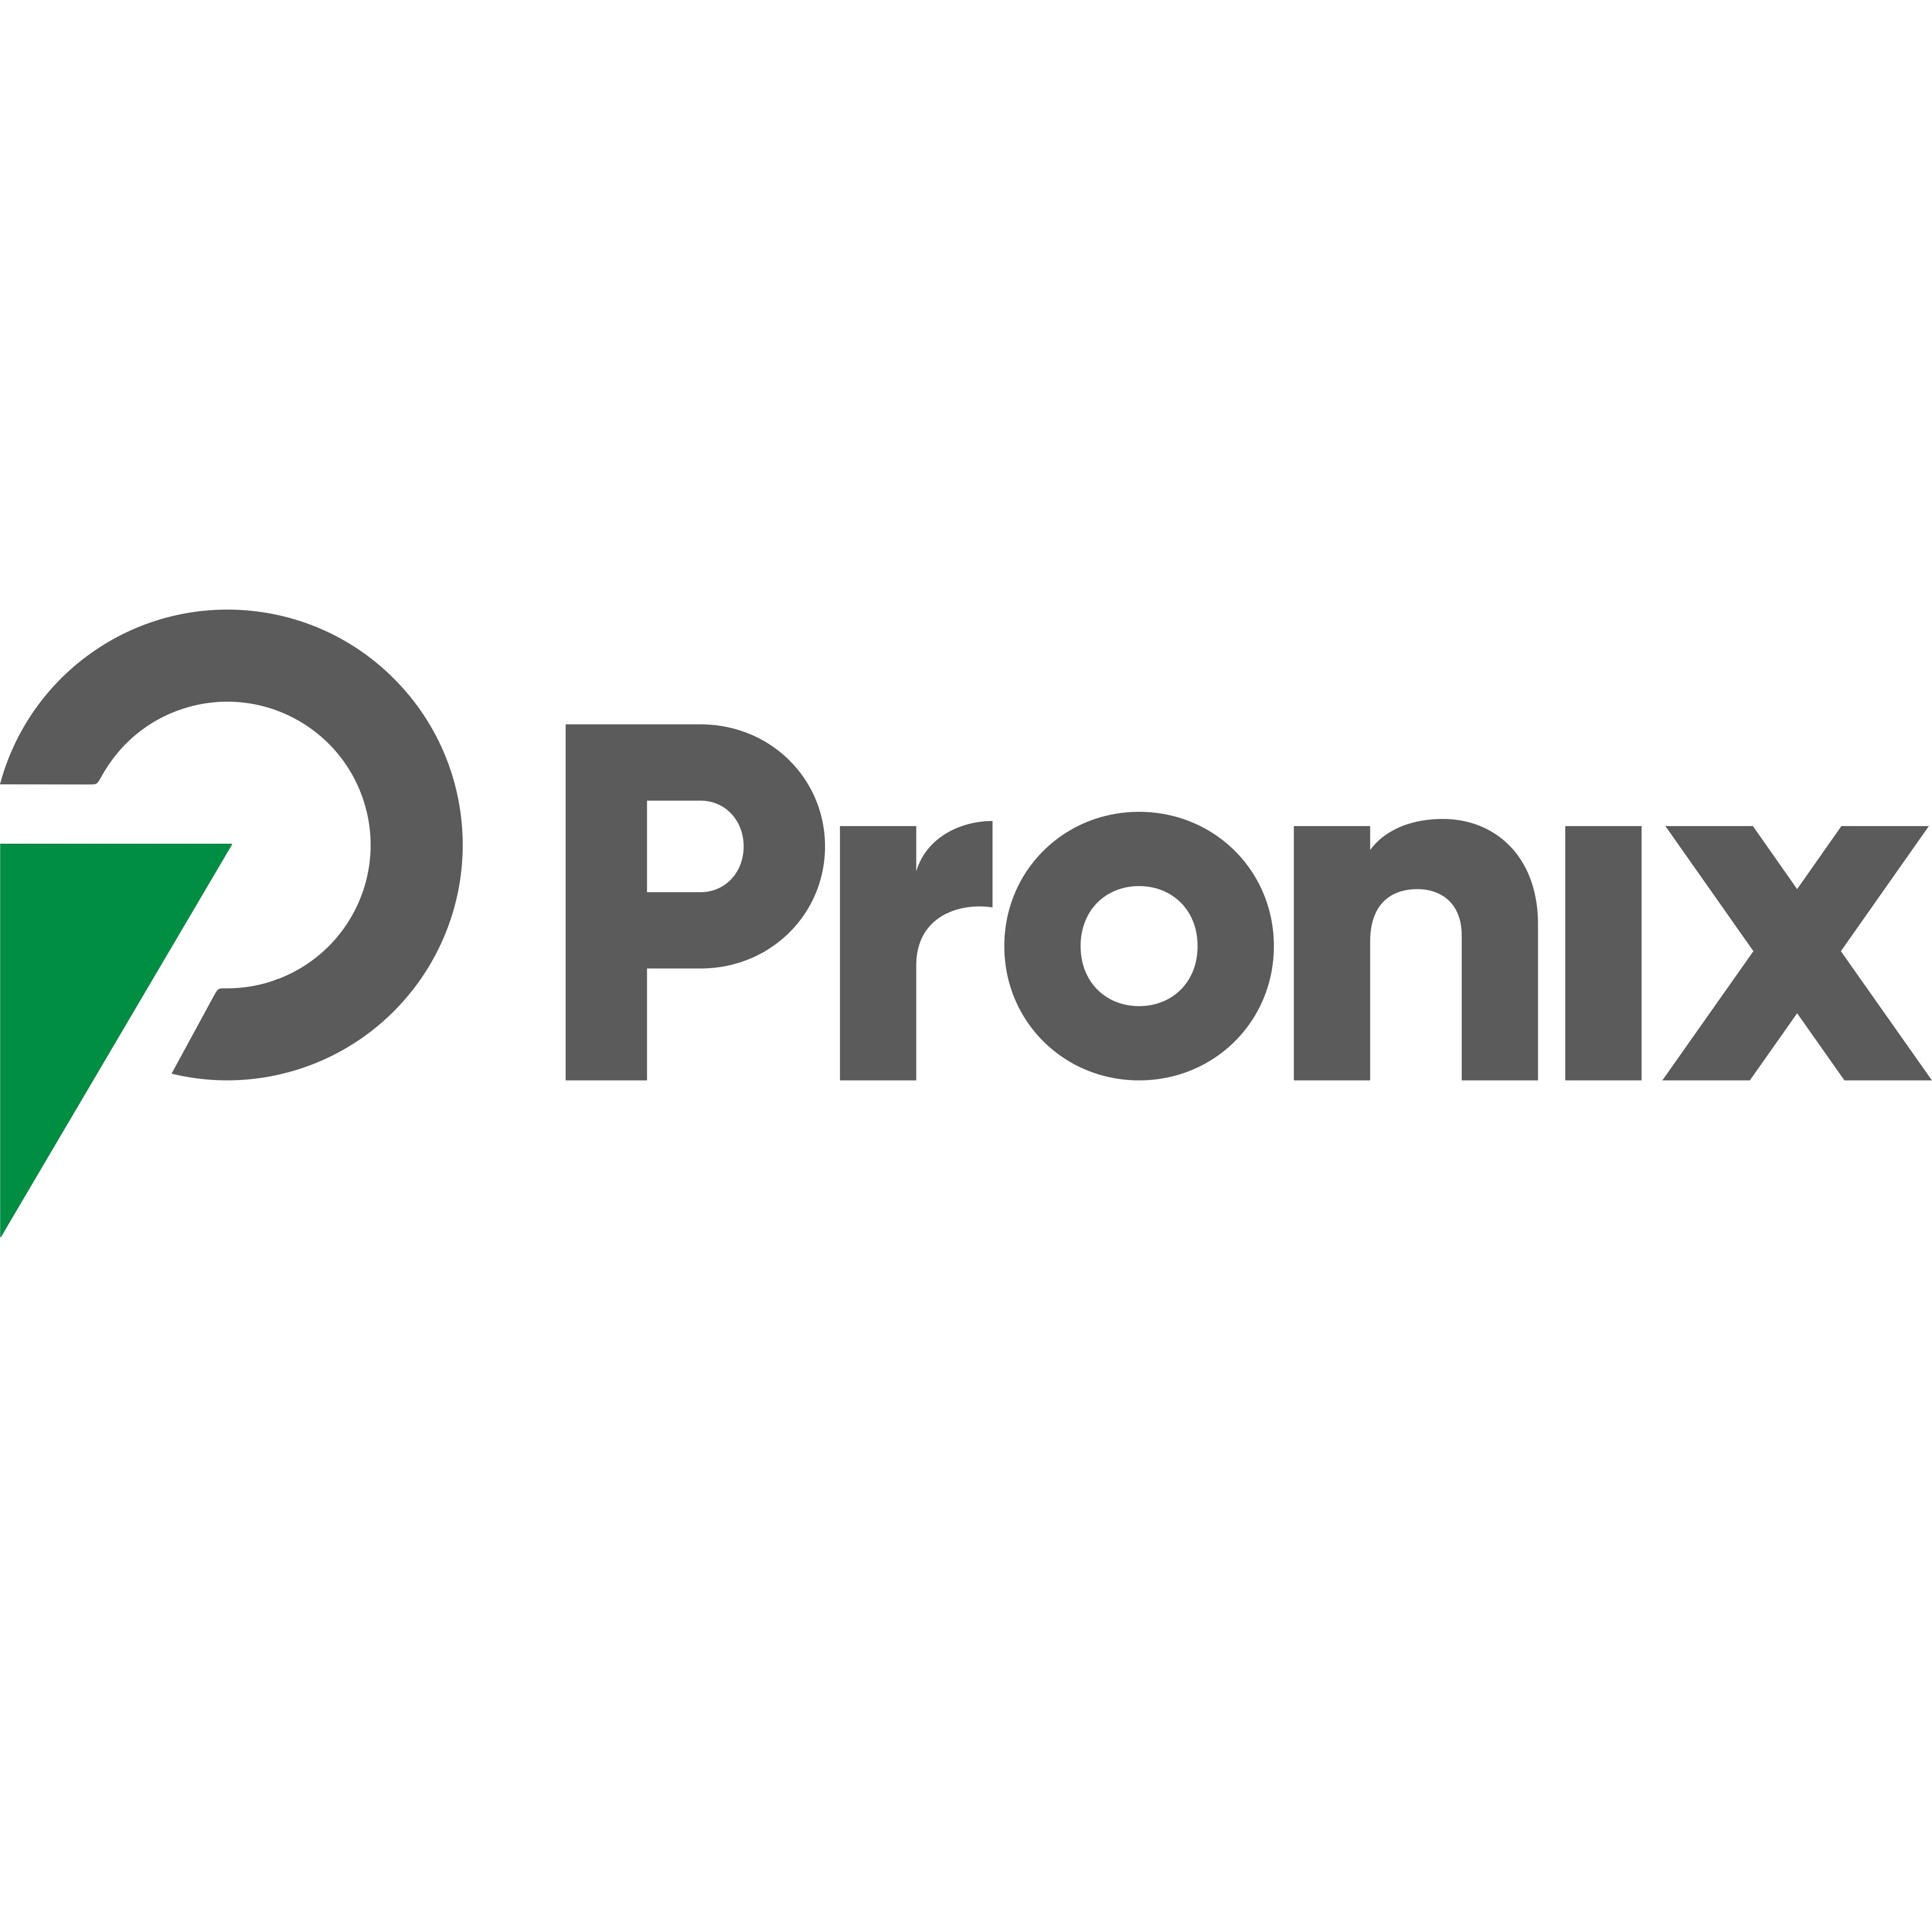 Pronix